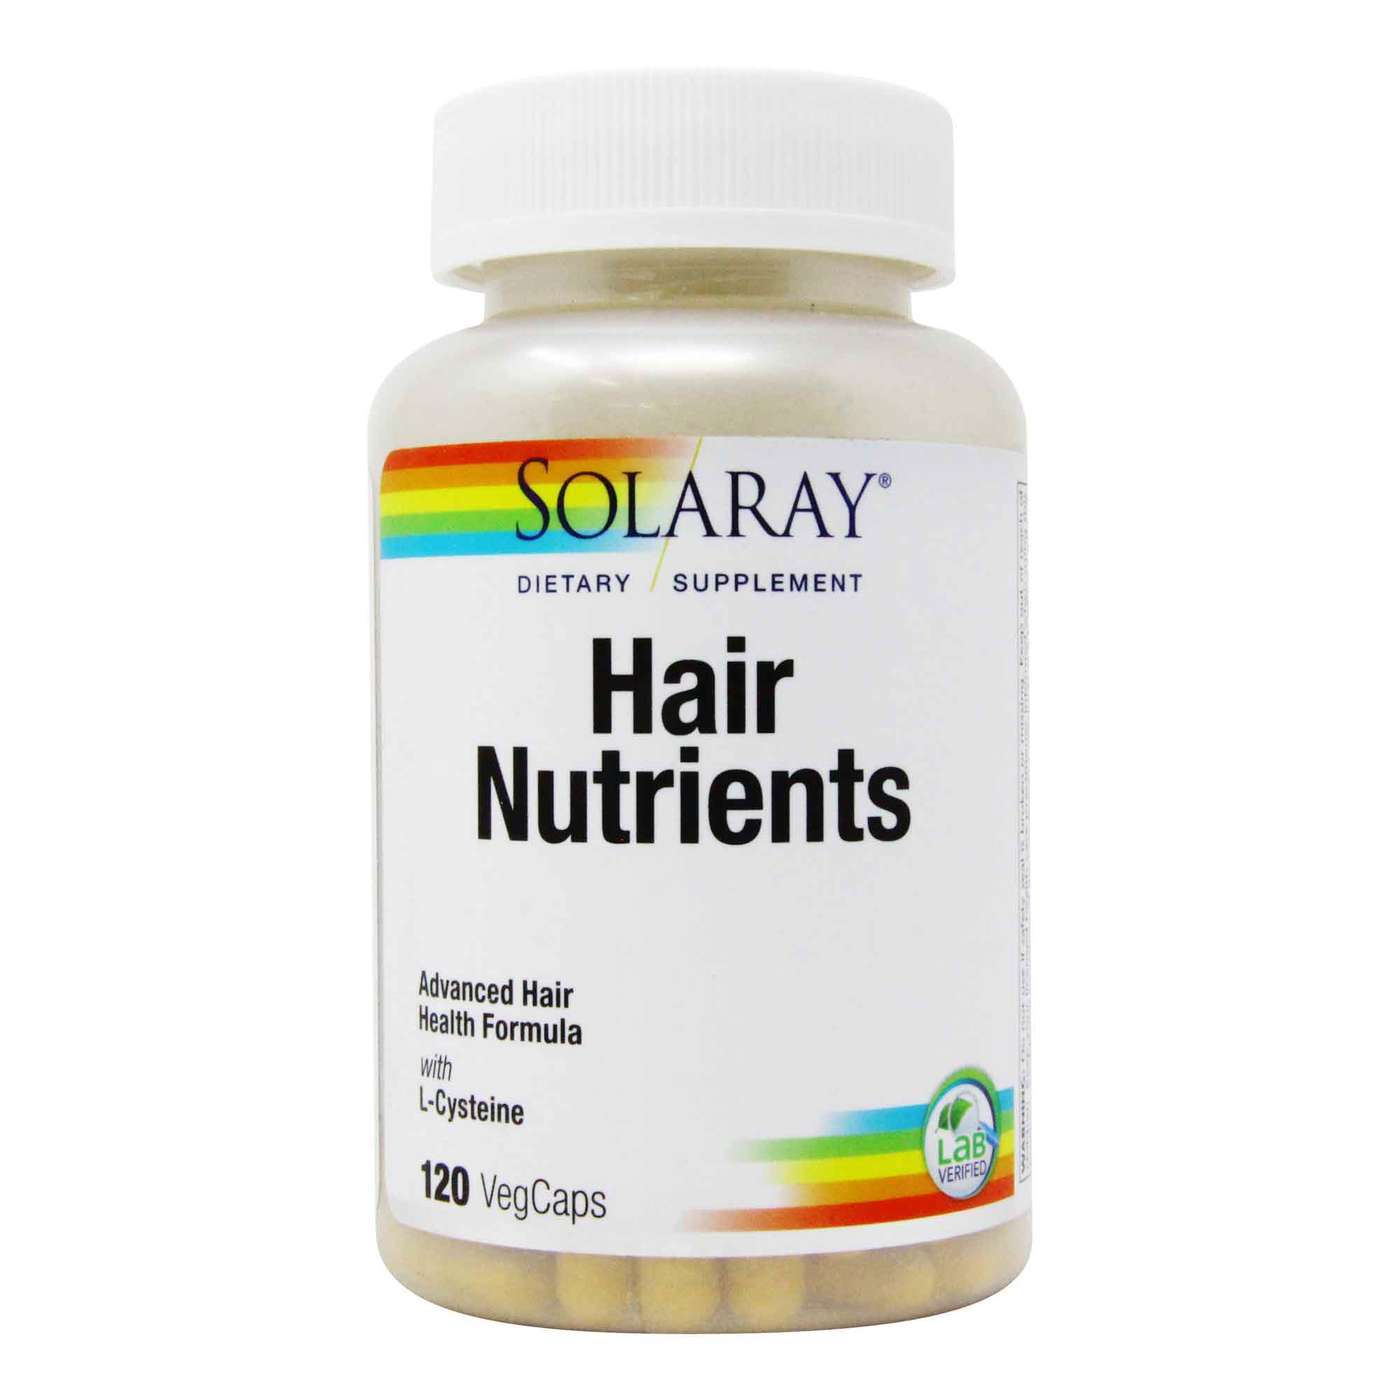 Solaray Hair Nutrients - 120 VegCaps 